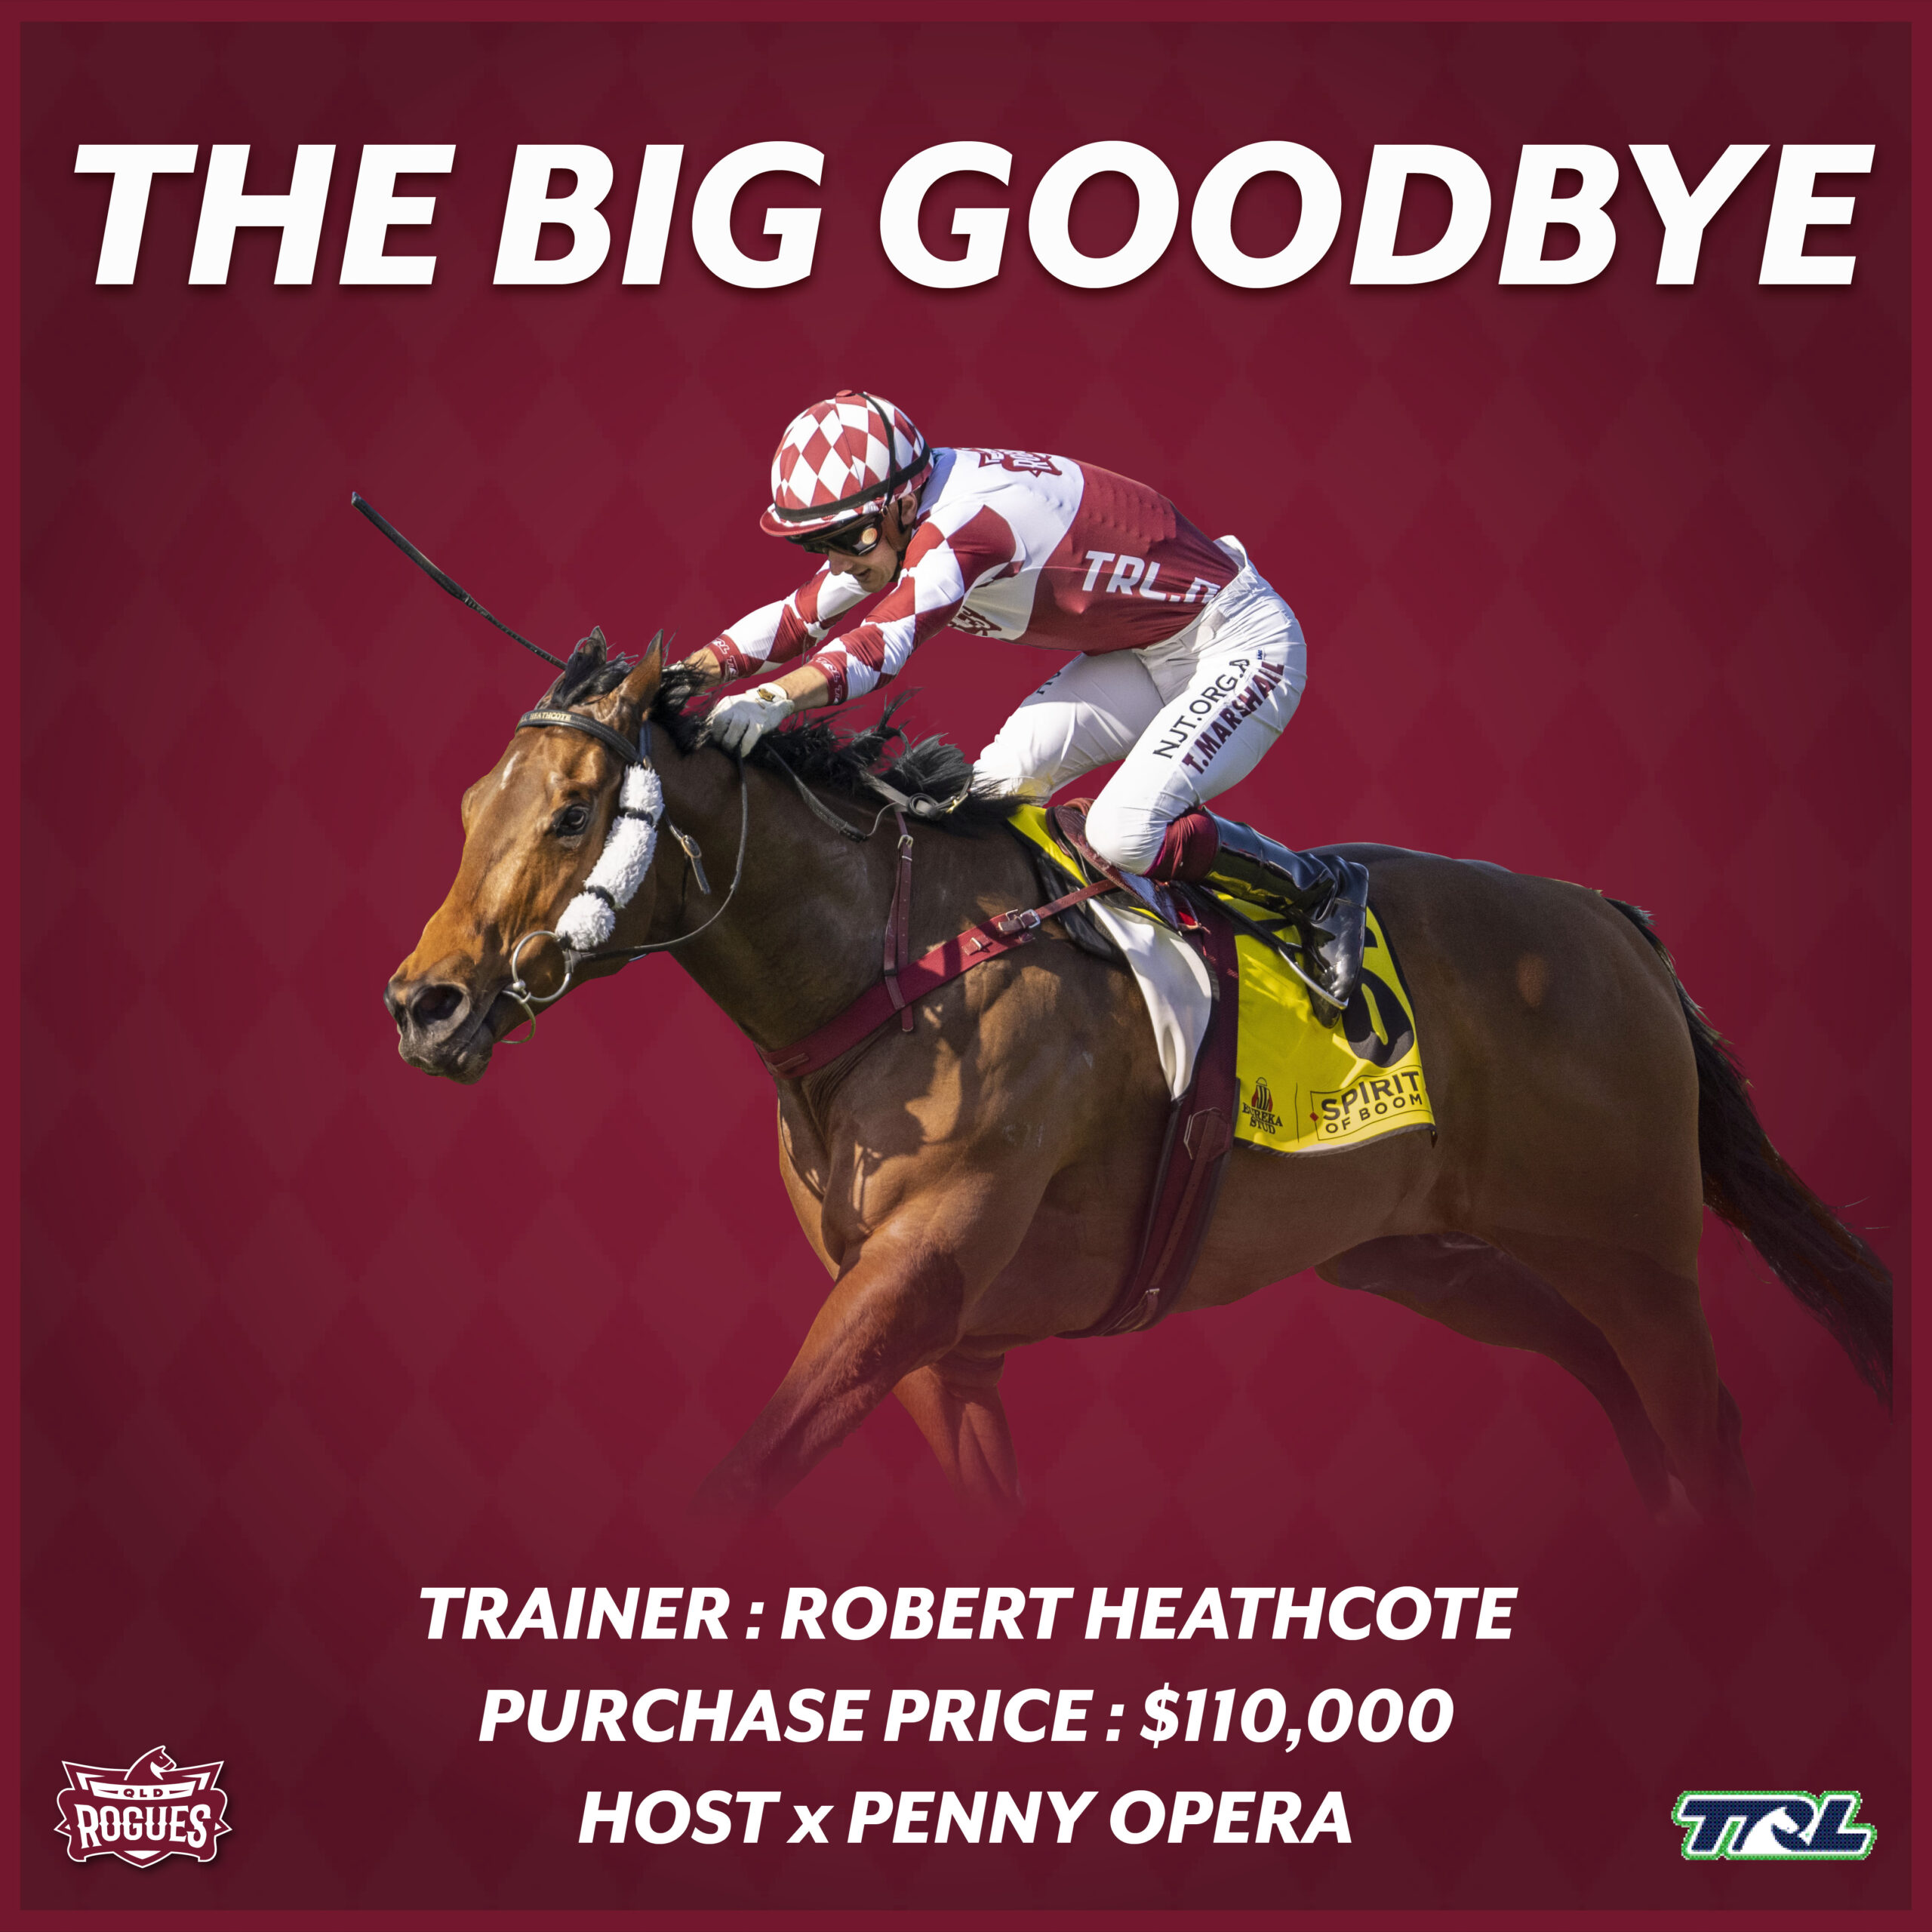 The Big Goodbye racehorse